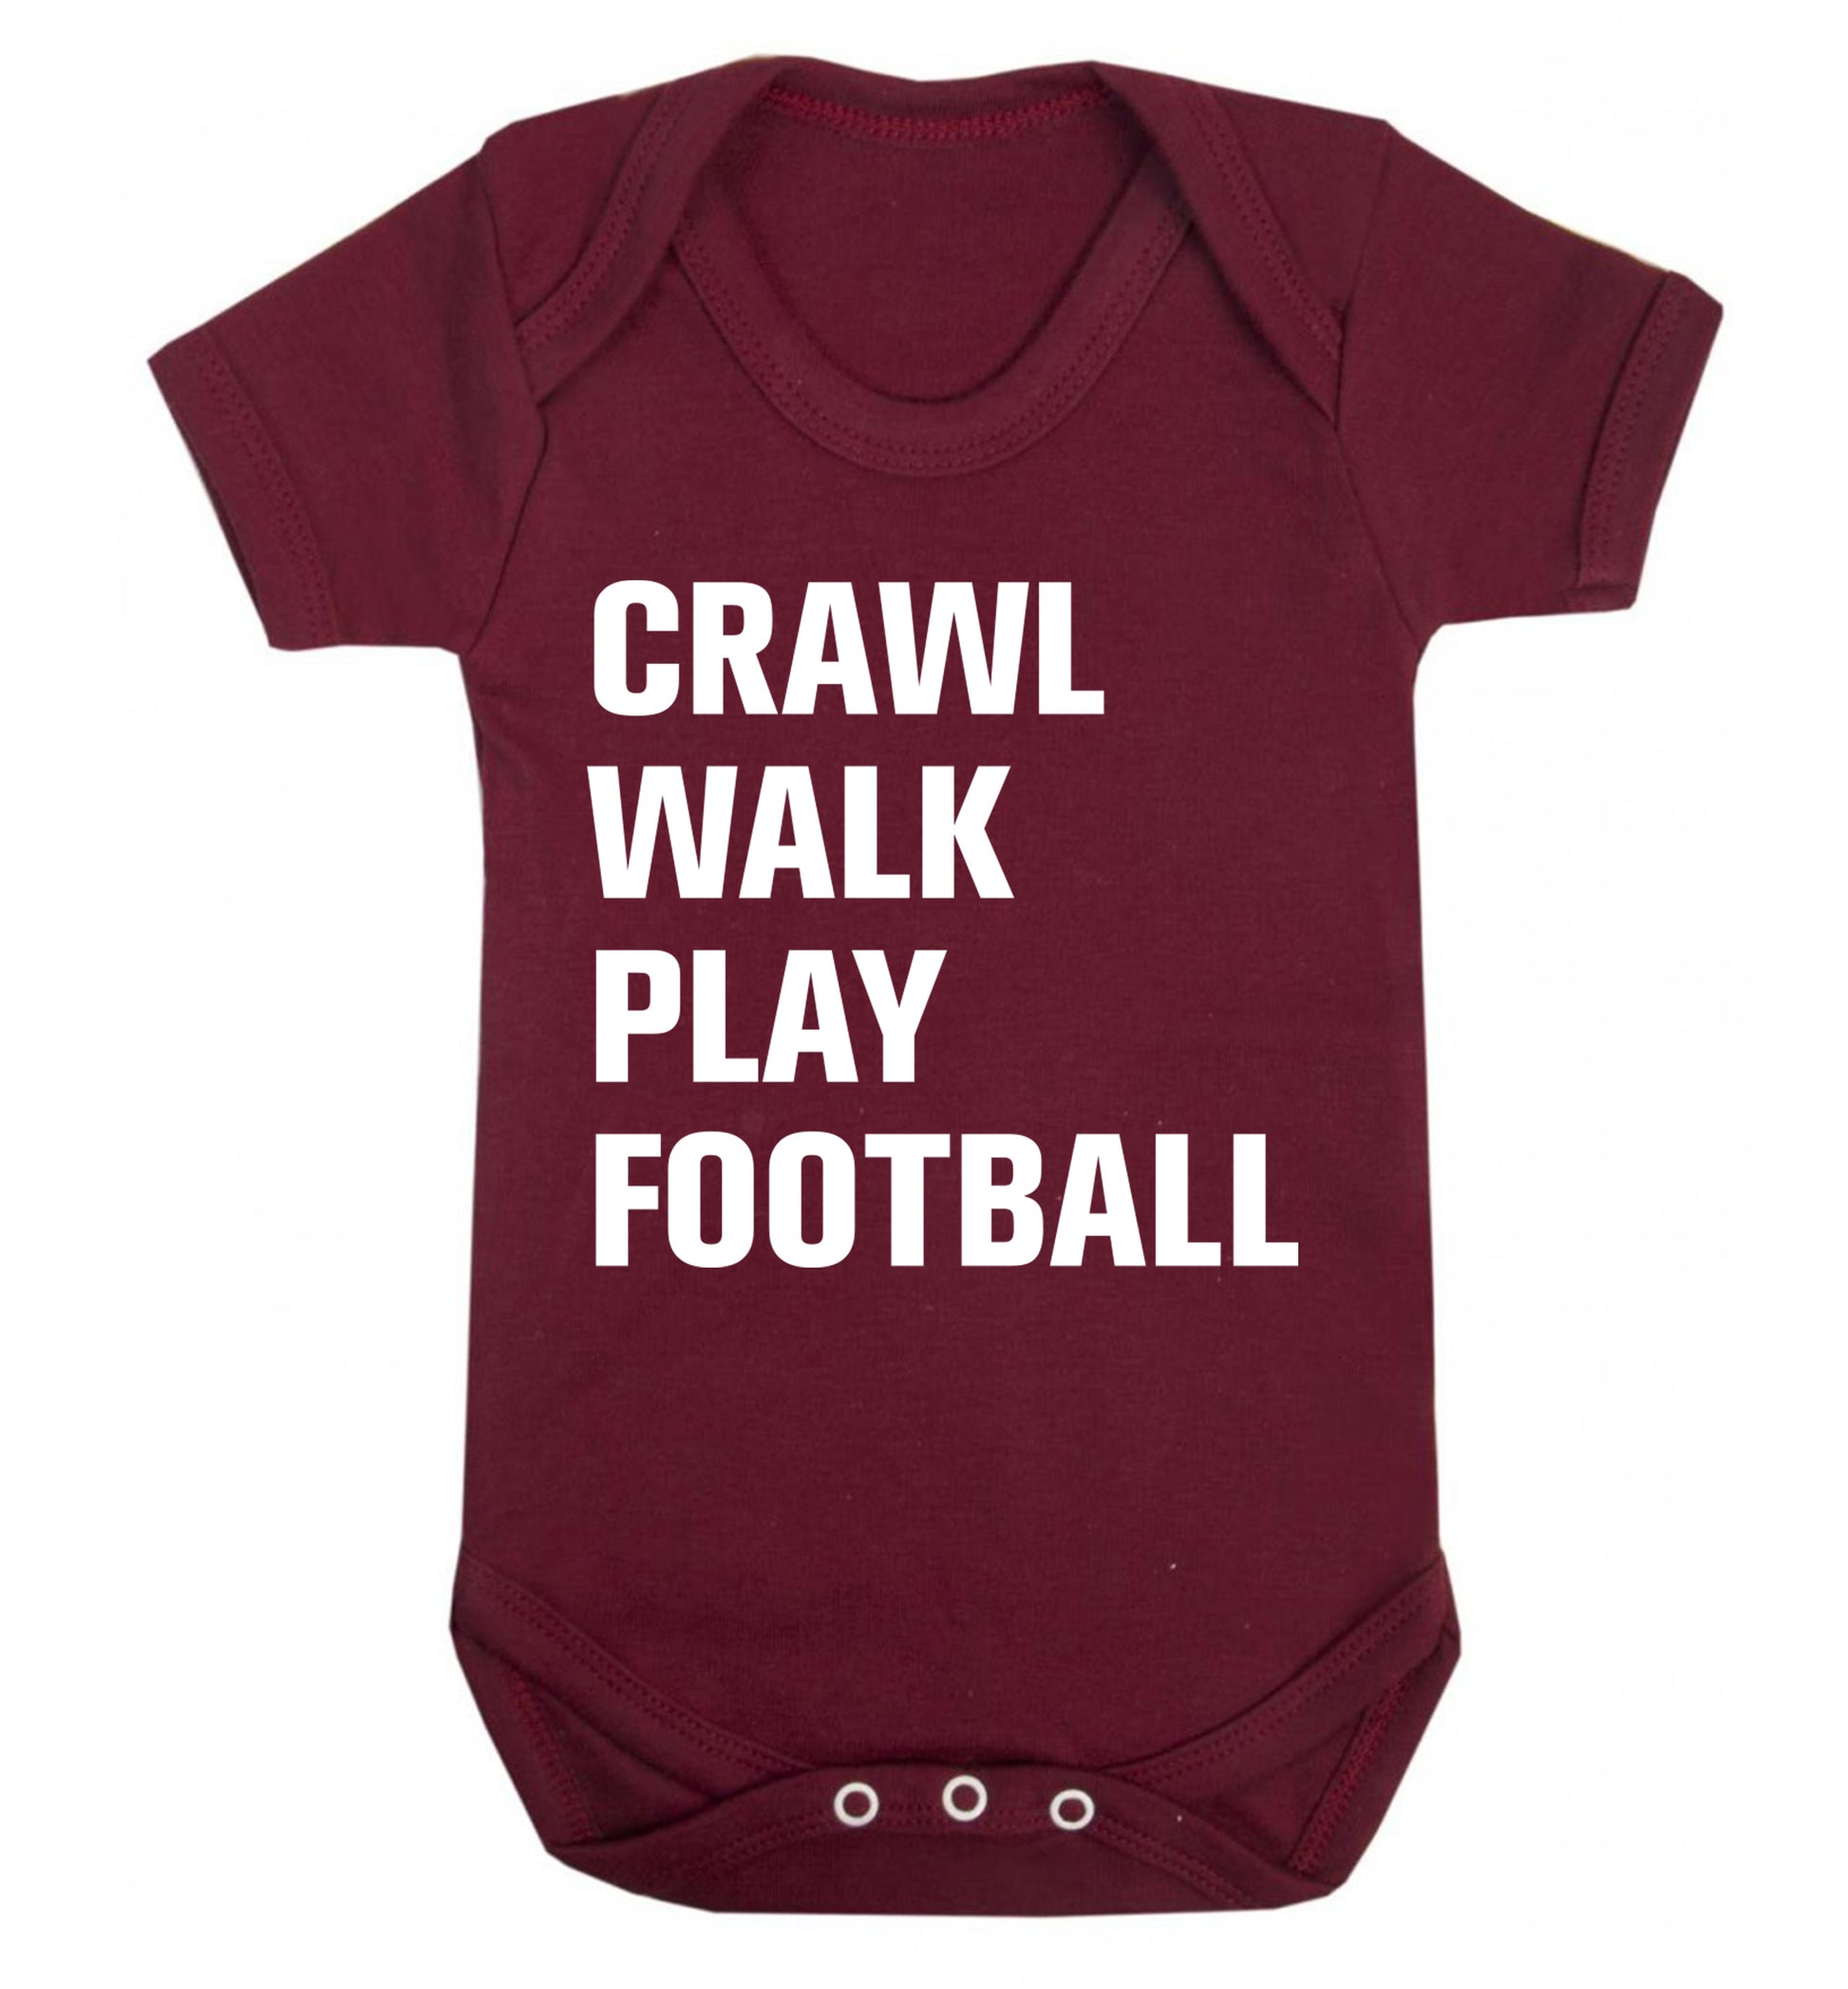 Crawl, walk, play football Baby Vest maroon 18-24 months